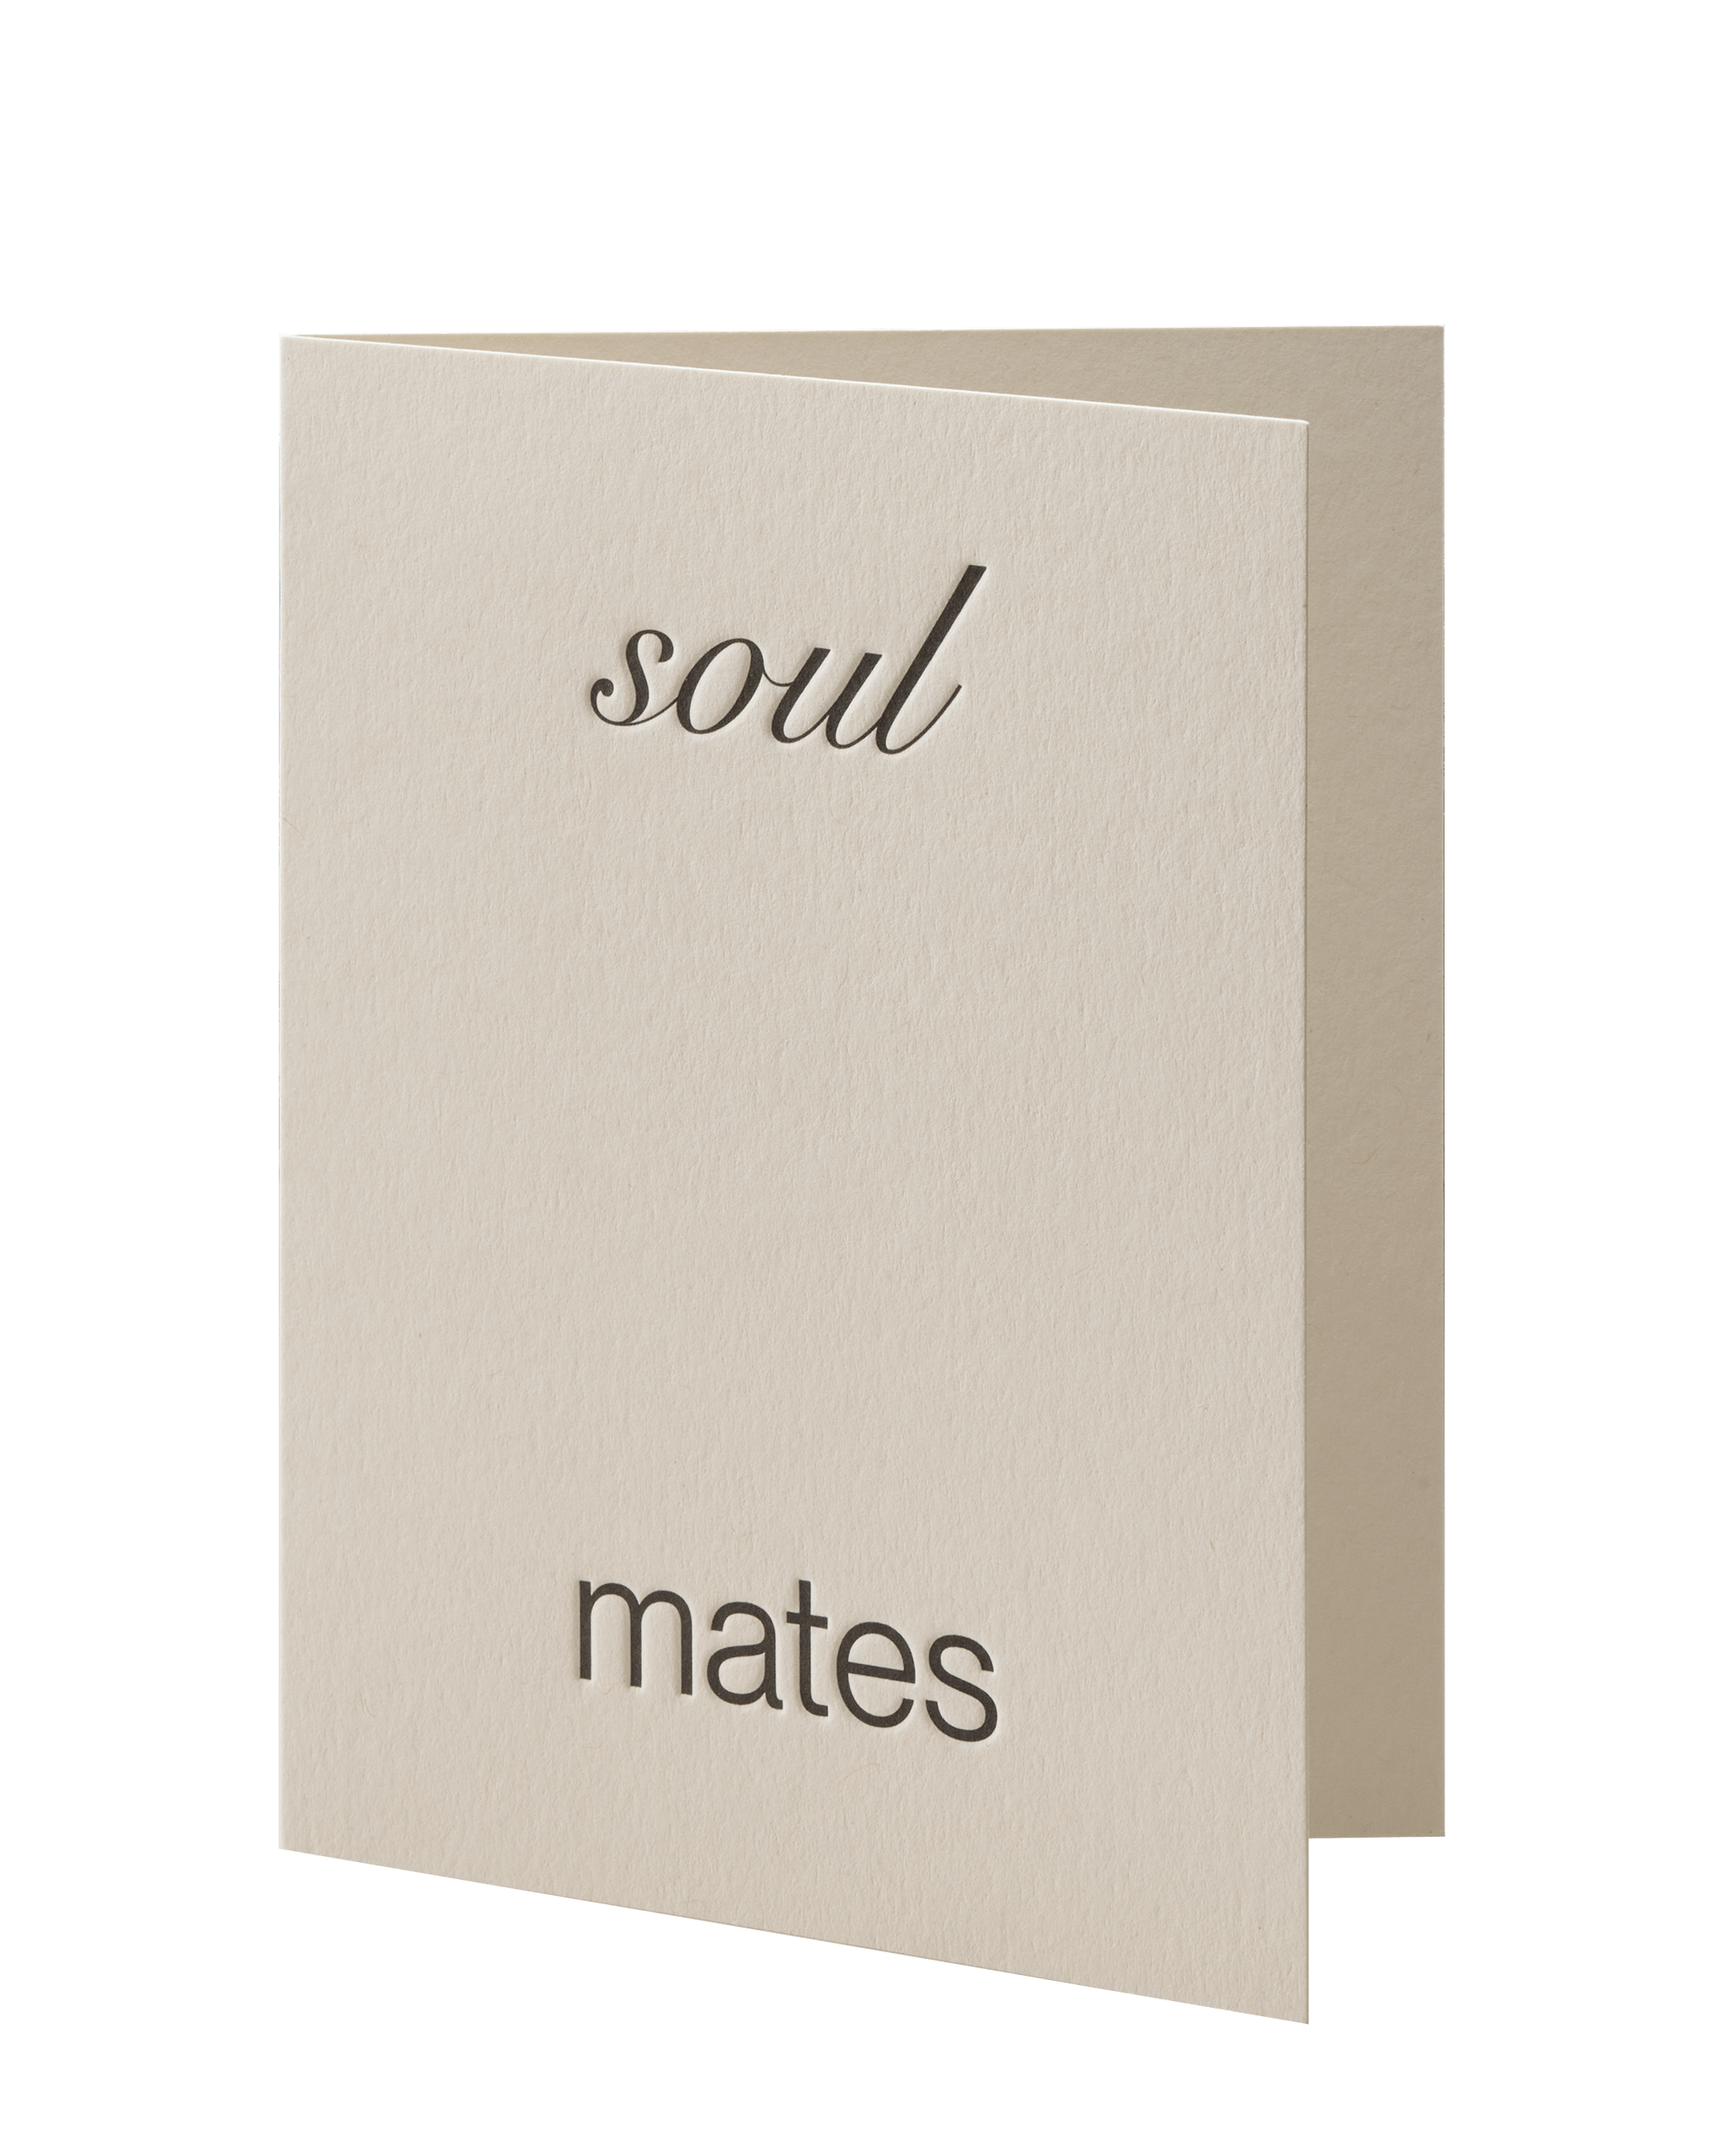 Short Talk Greeting Cards Soul mates by Short Talk